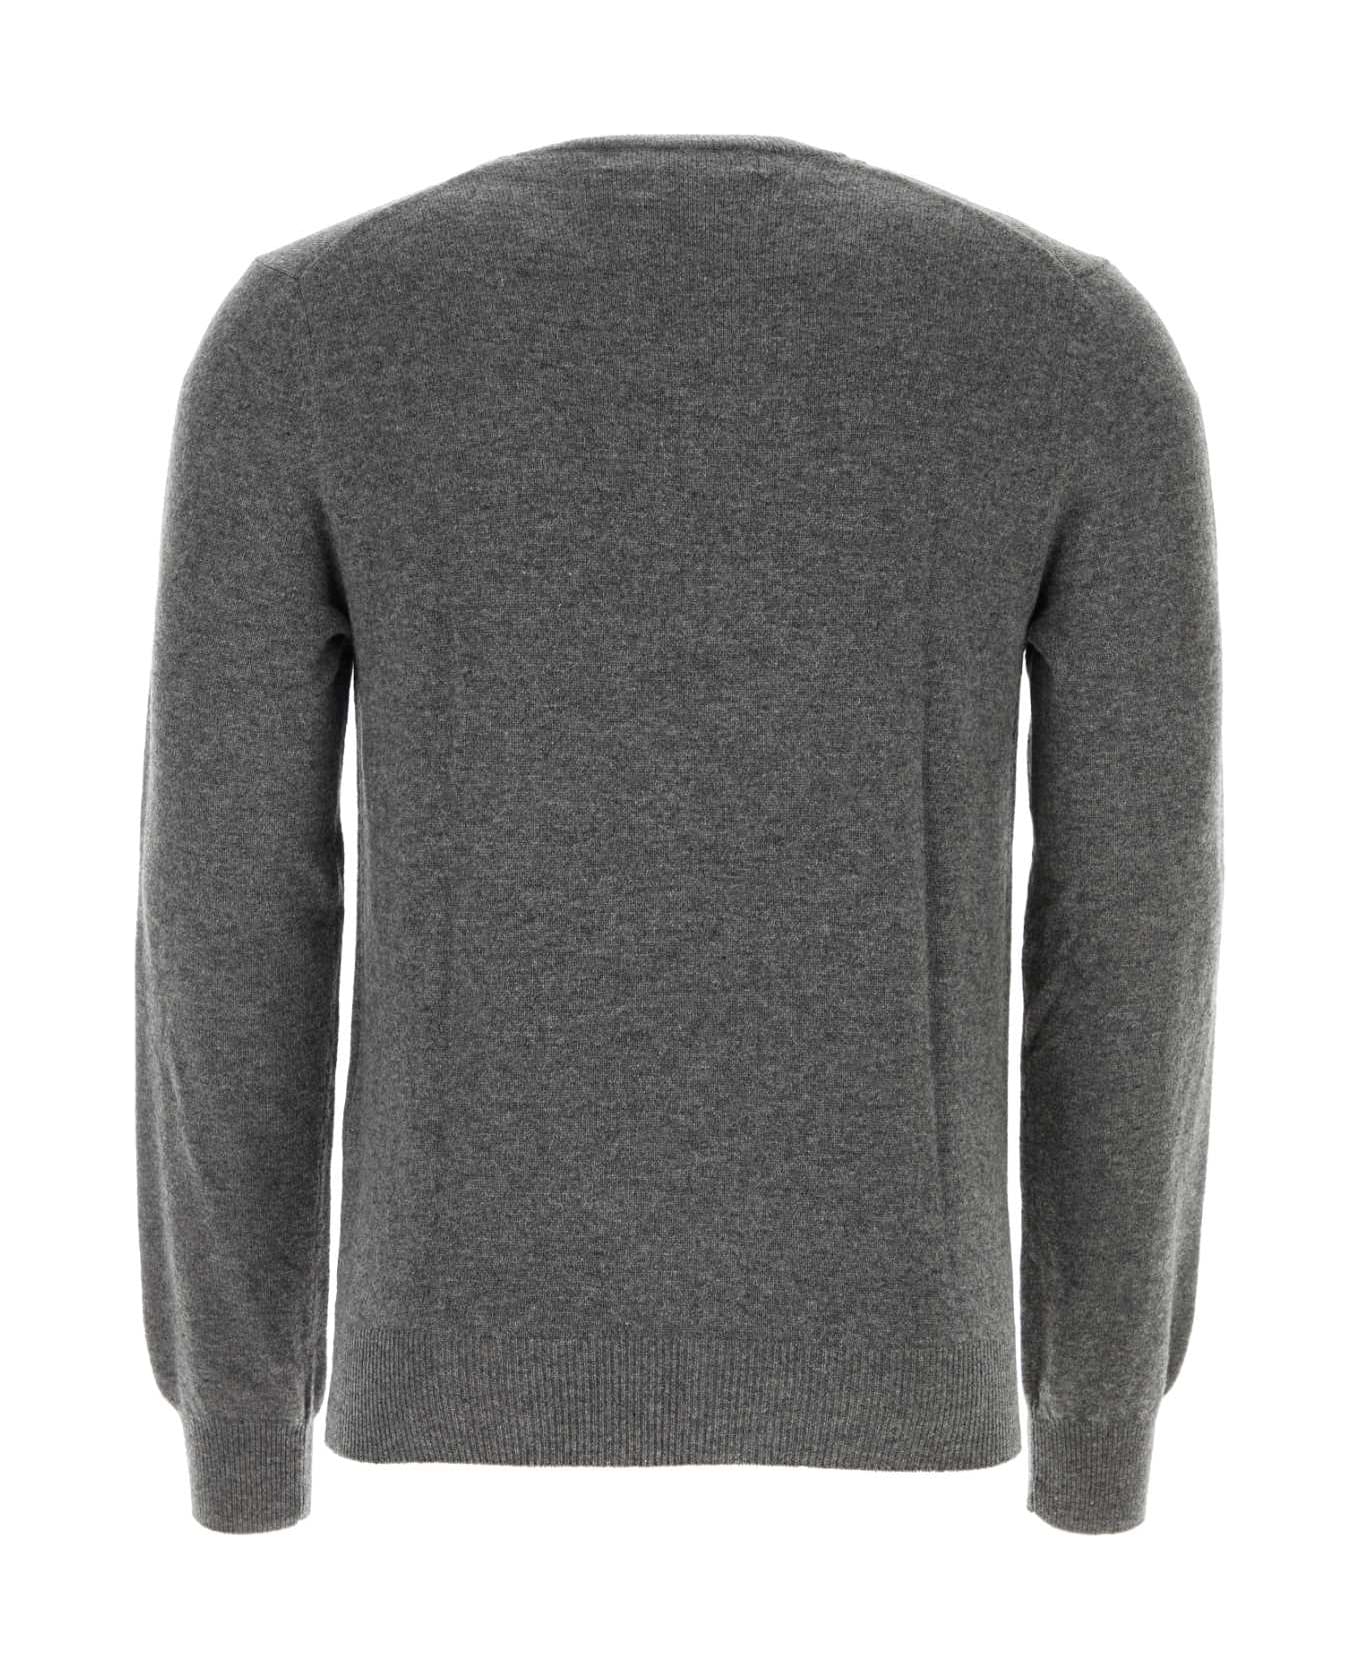 Comme des Garçons Play Grey Wool Sweater - GREY